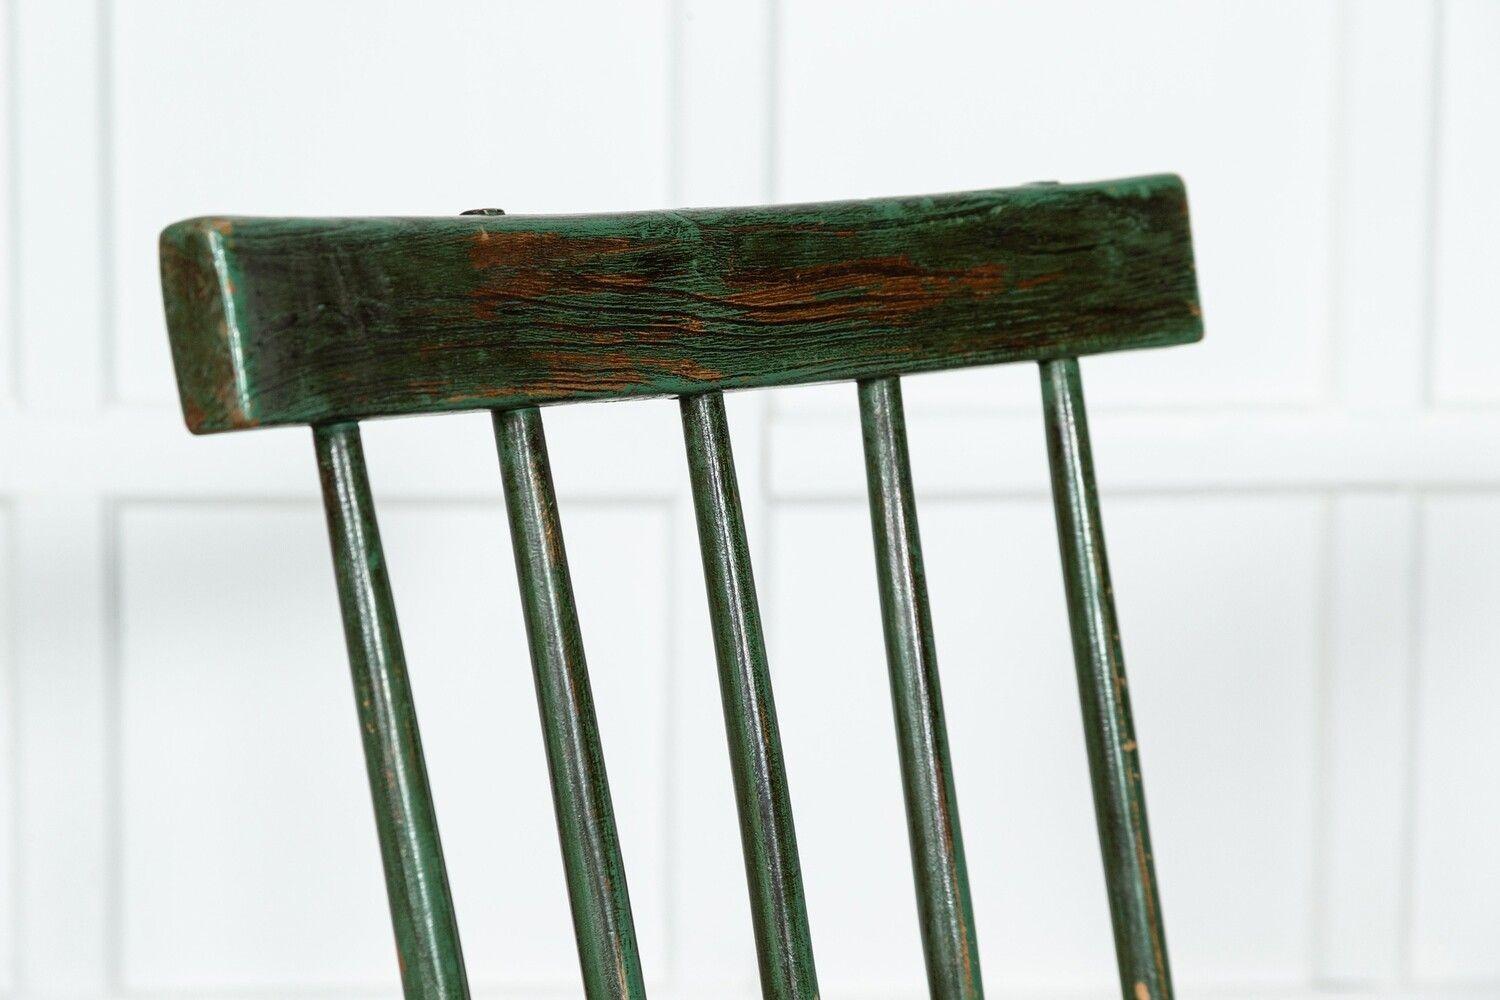 circa 1810
19thC Irish Vernacular Painted Ash, Elm & Pine Hedge Chair
sku 1641
W51 x D32 x H77 cm
Seat height 37 cm